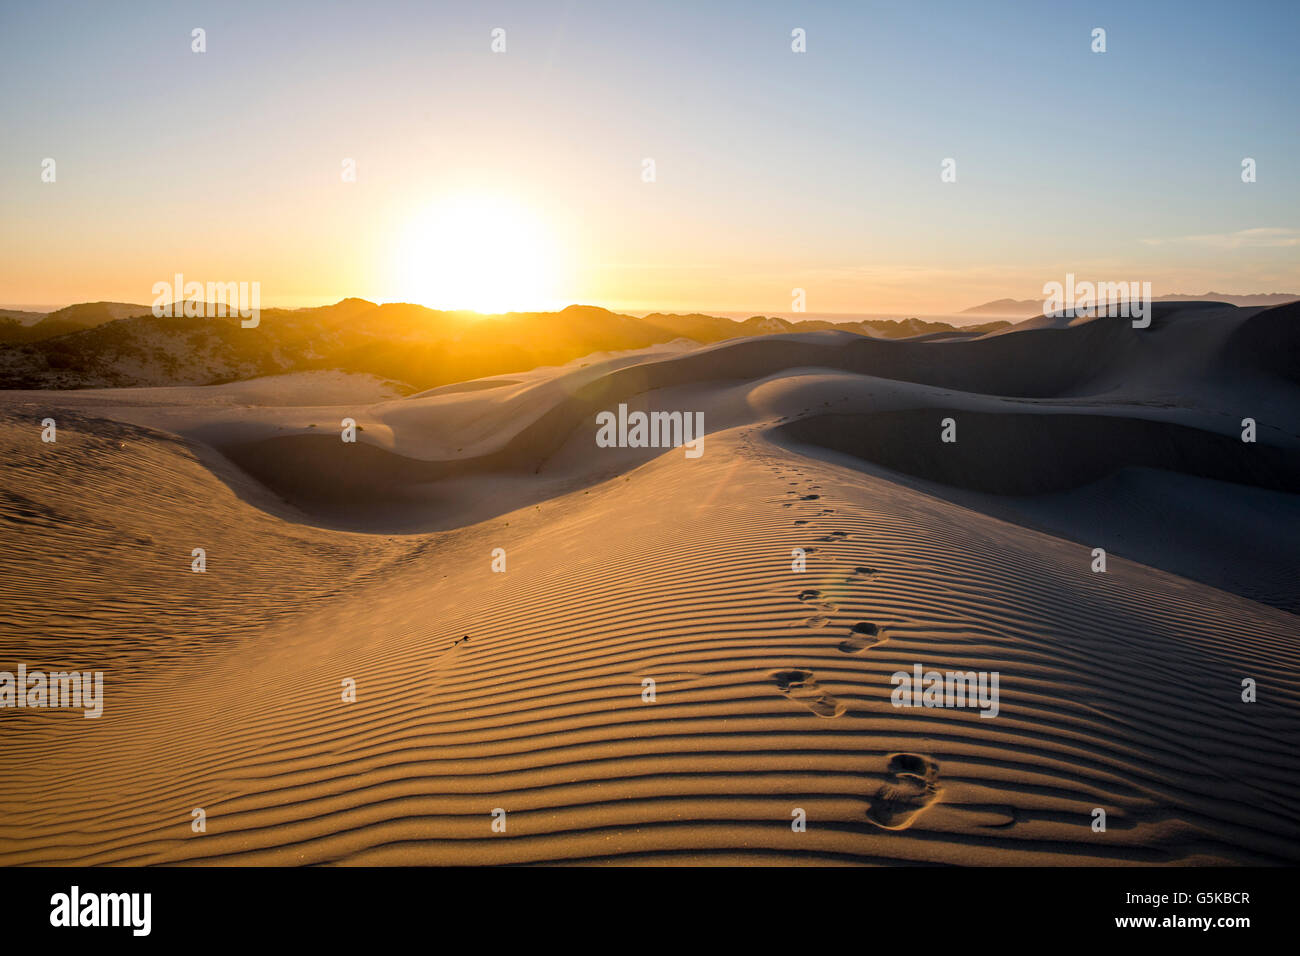 Footprints in desert sand dunes Stock Photo